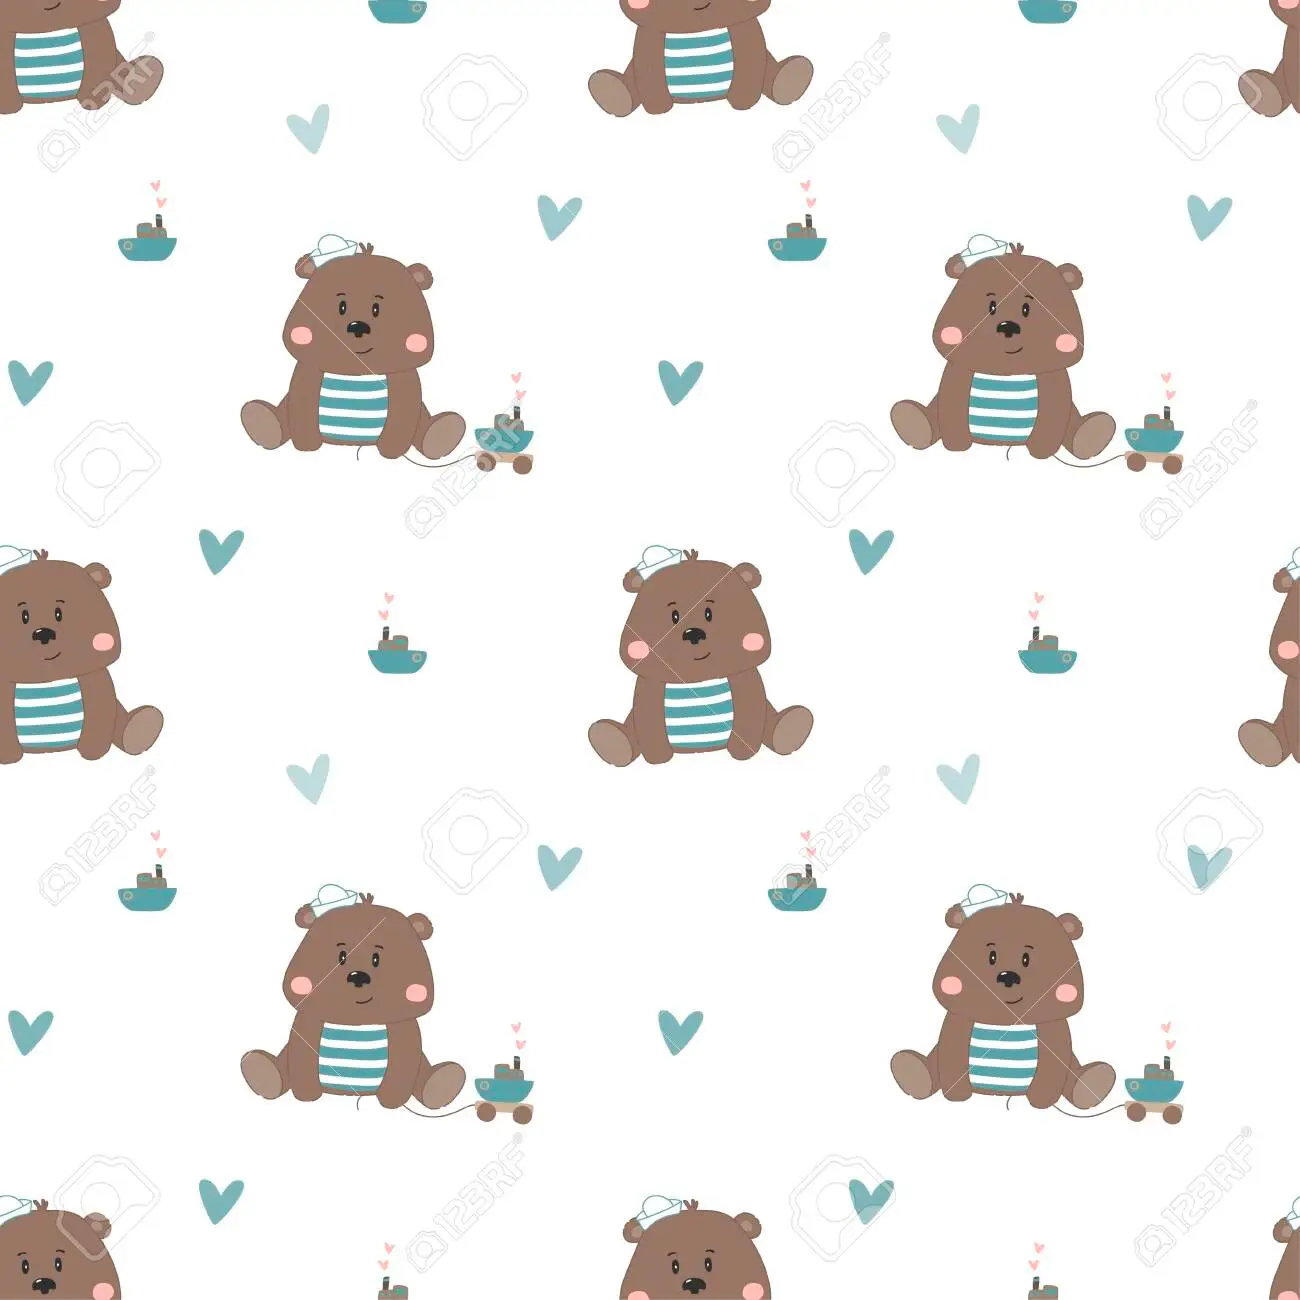 Download Free 100 + cute animal wallpapers cartoon